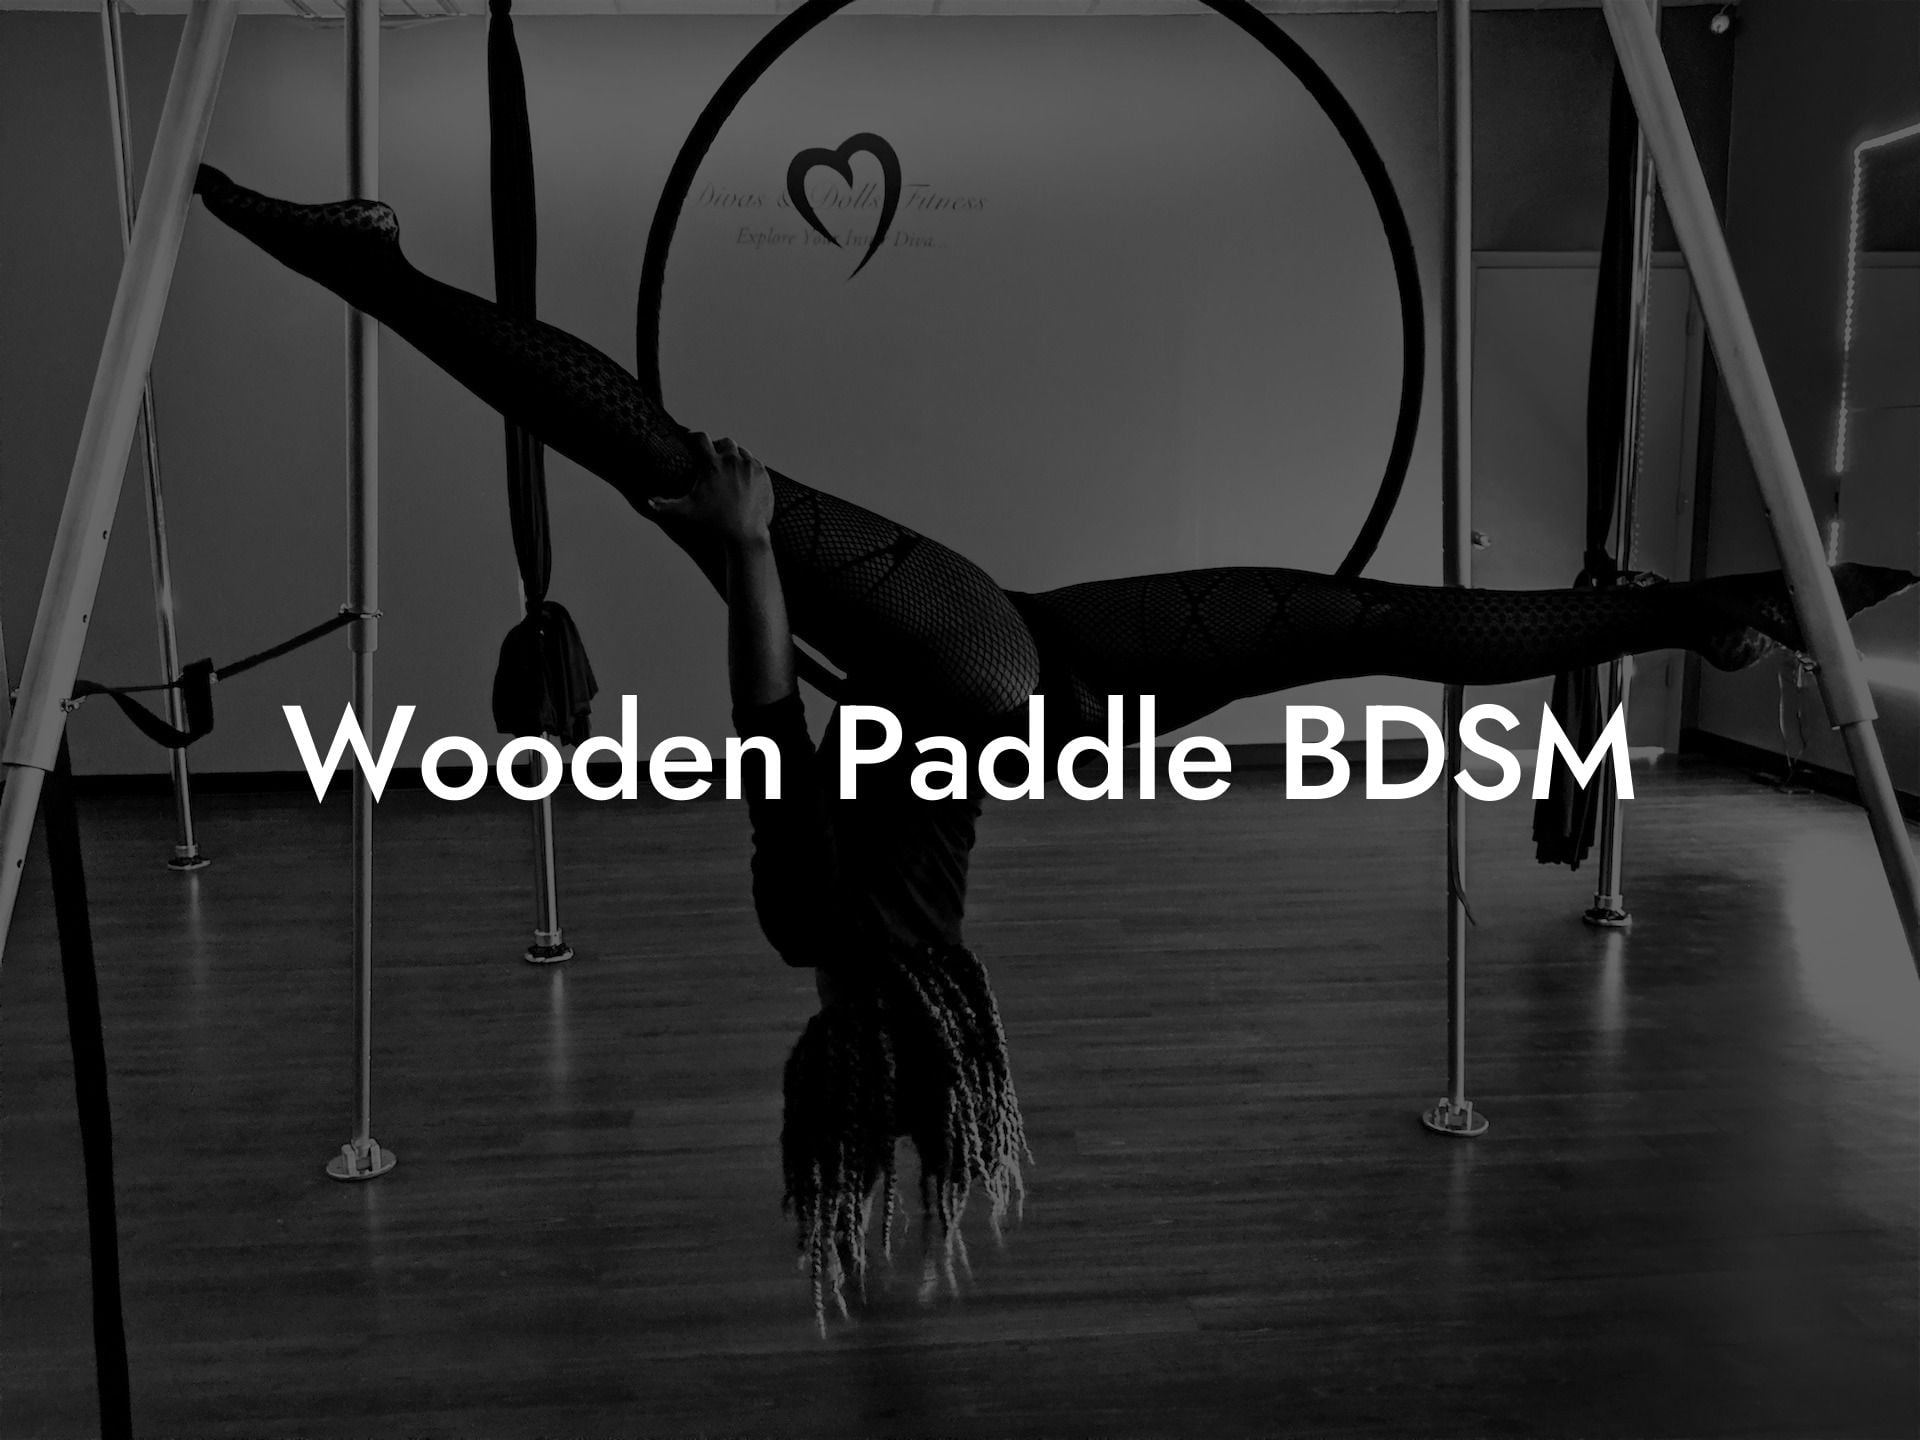 Wooden Paddle BDSM